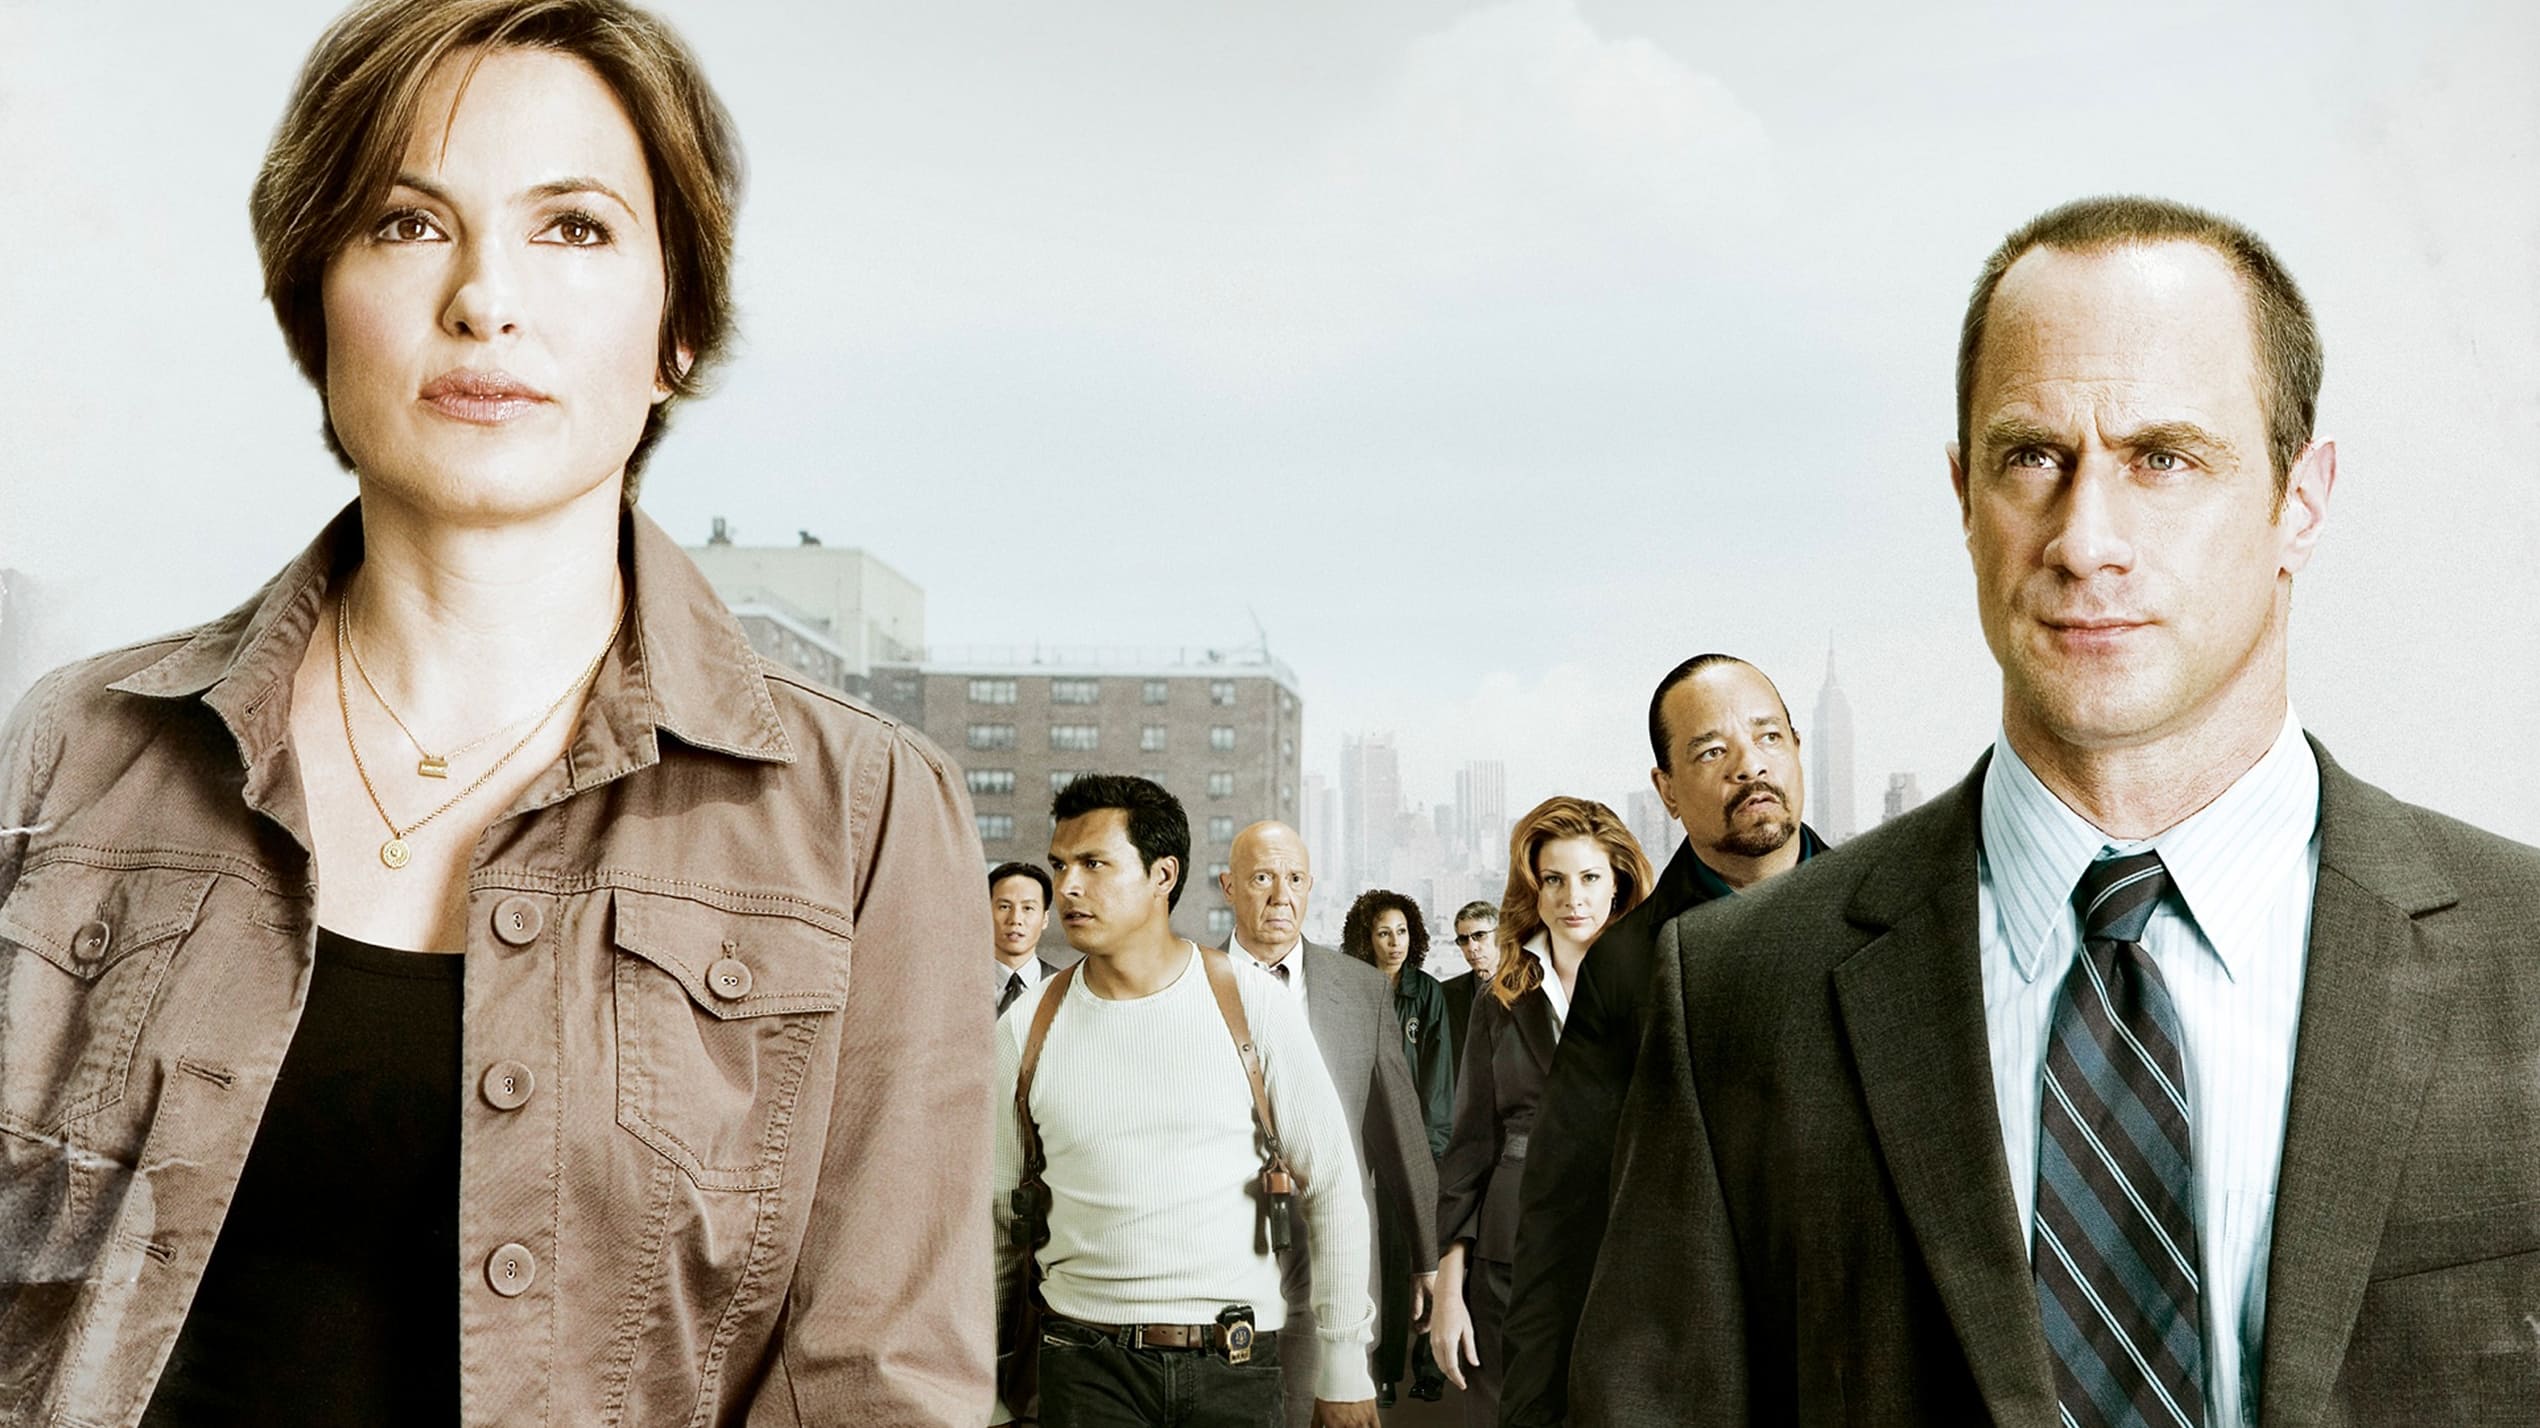 Law & Order: Special Victims Unit - Season 17